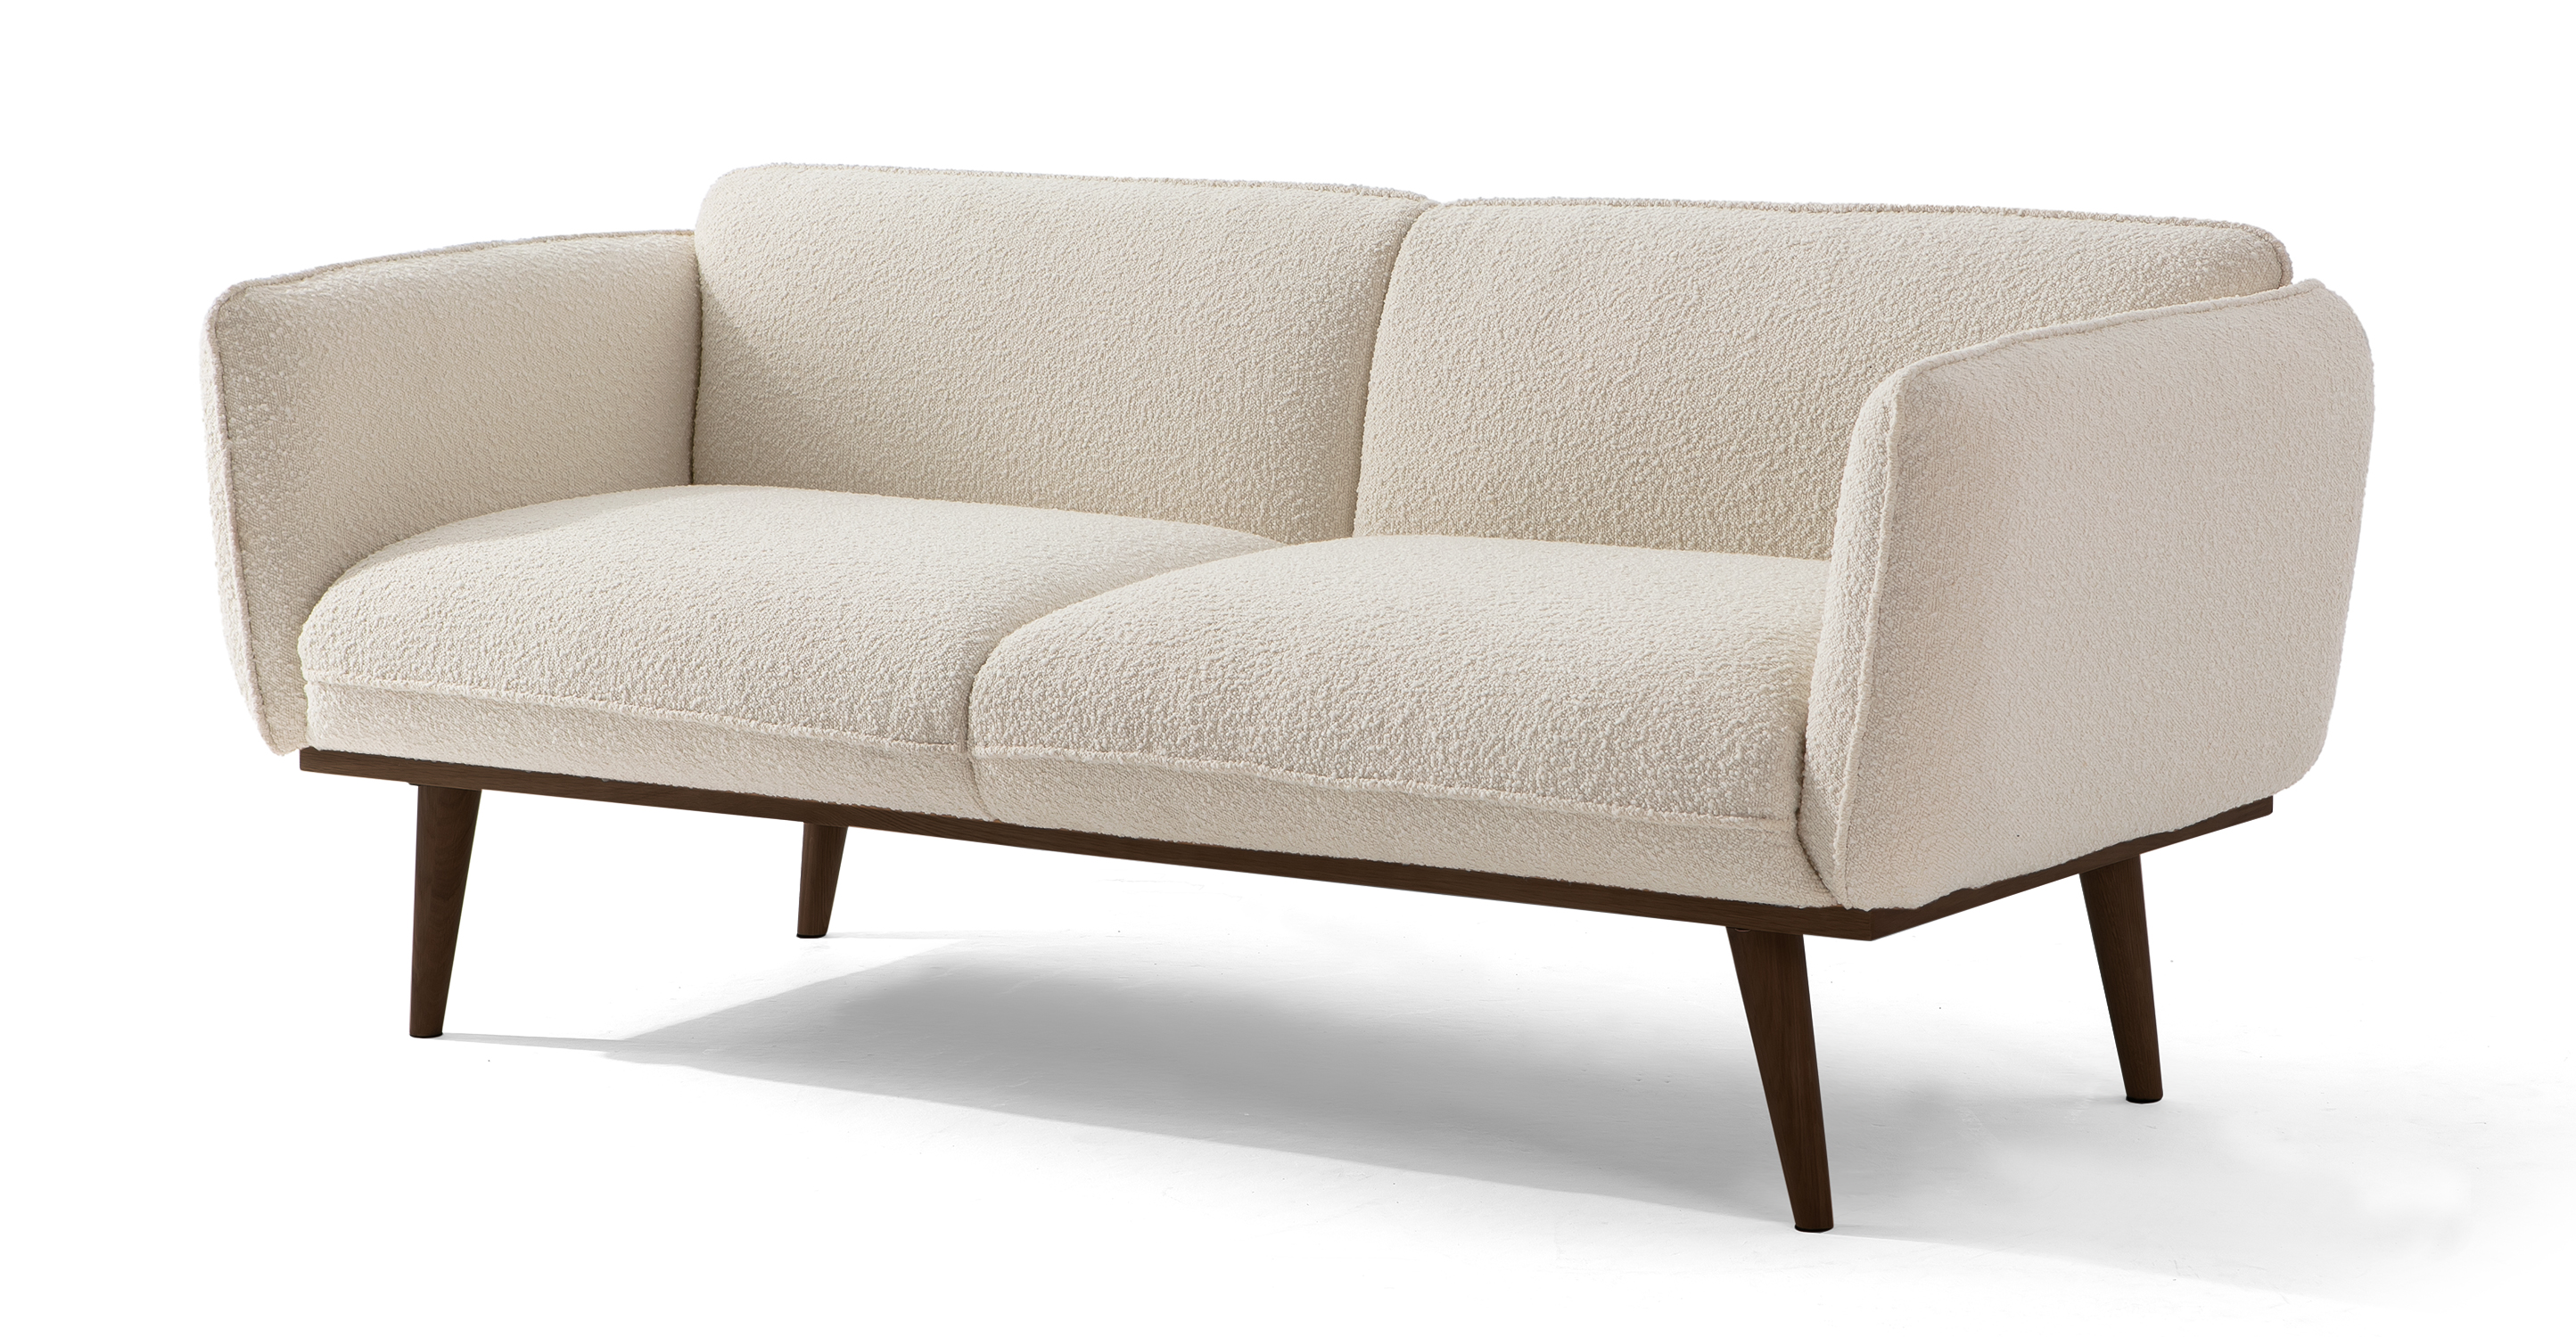 classic sofa sets